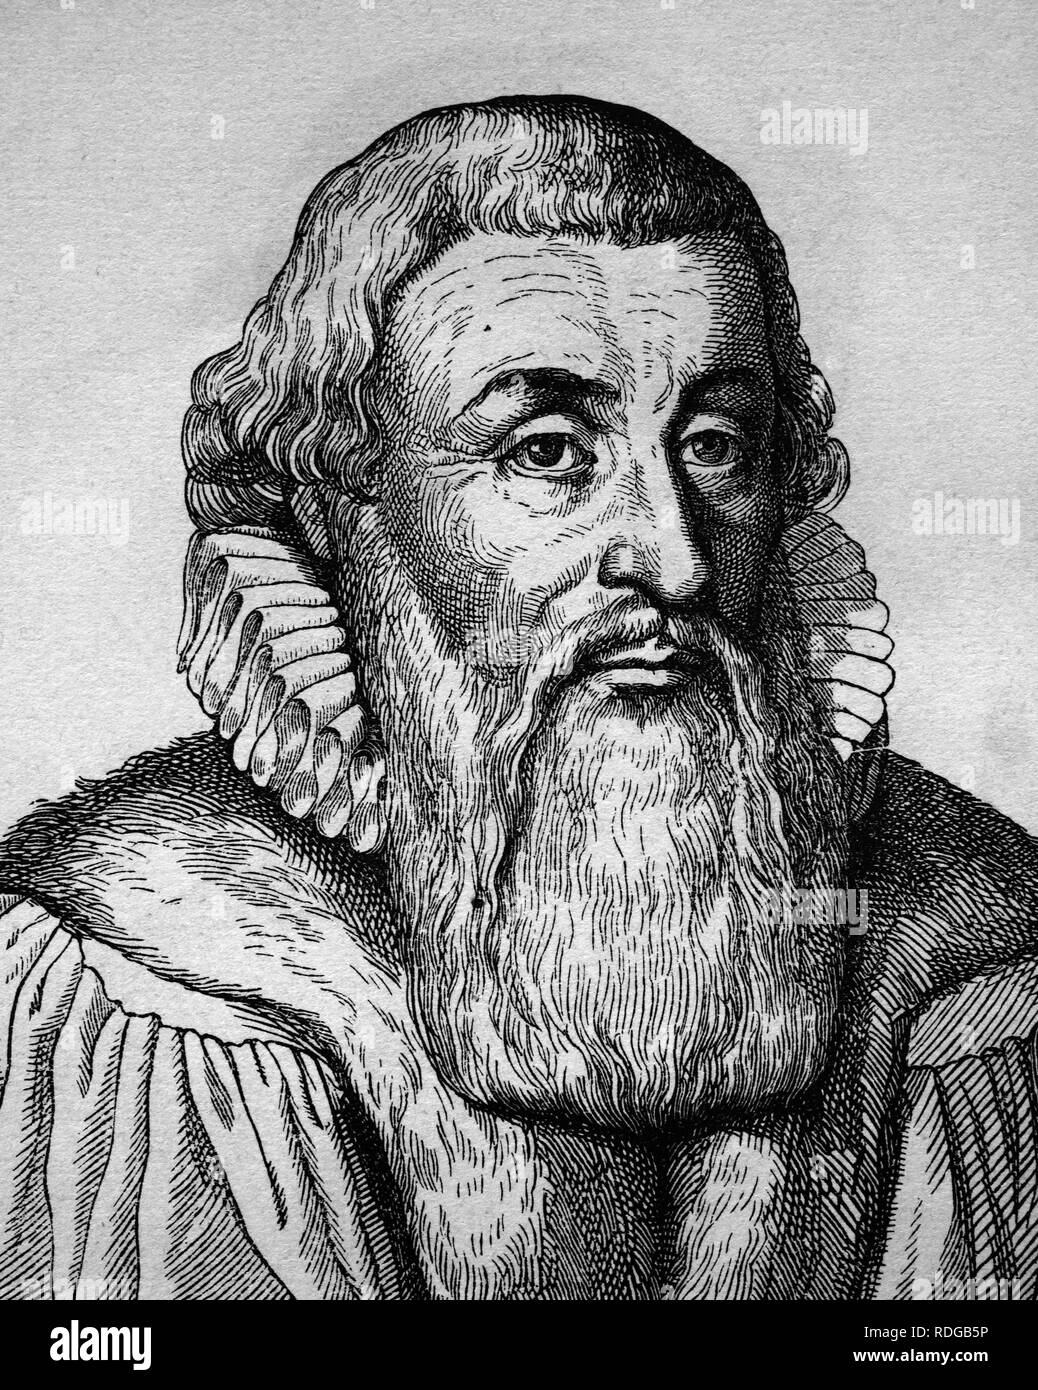 Johann Arnd, Arndt, 1555 - 1621, theologian, author of books, portrait, historical illustration, 1880 Stock Photo